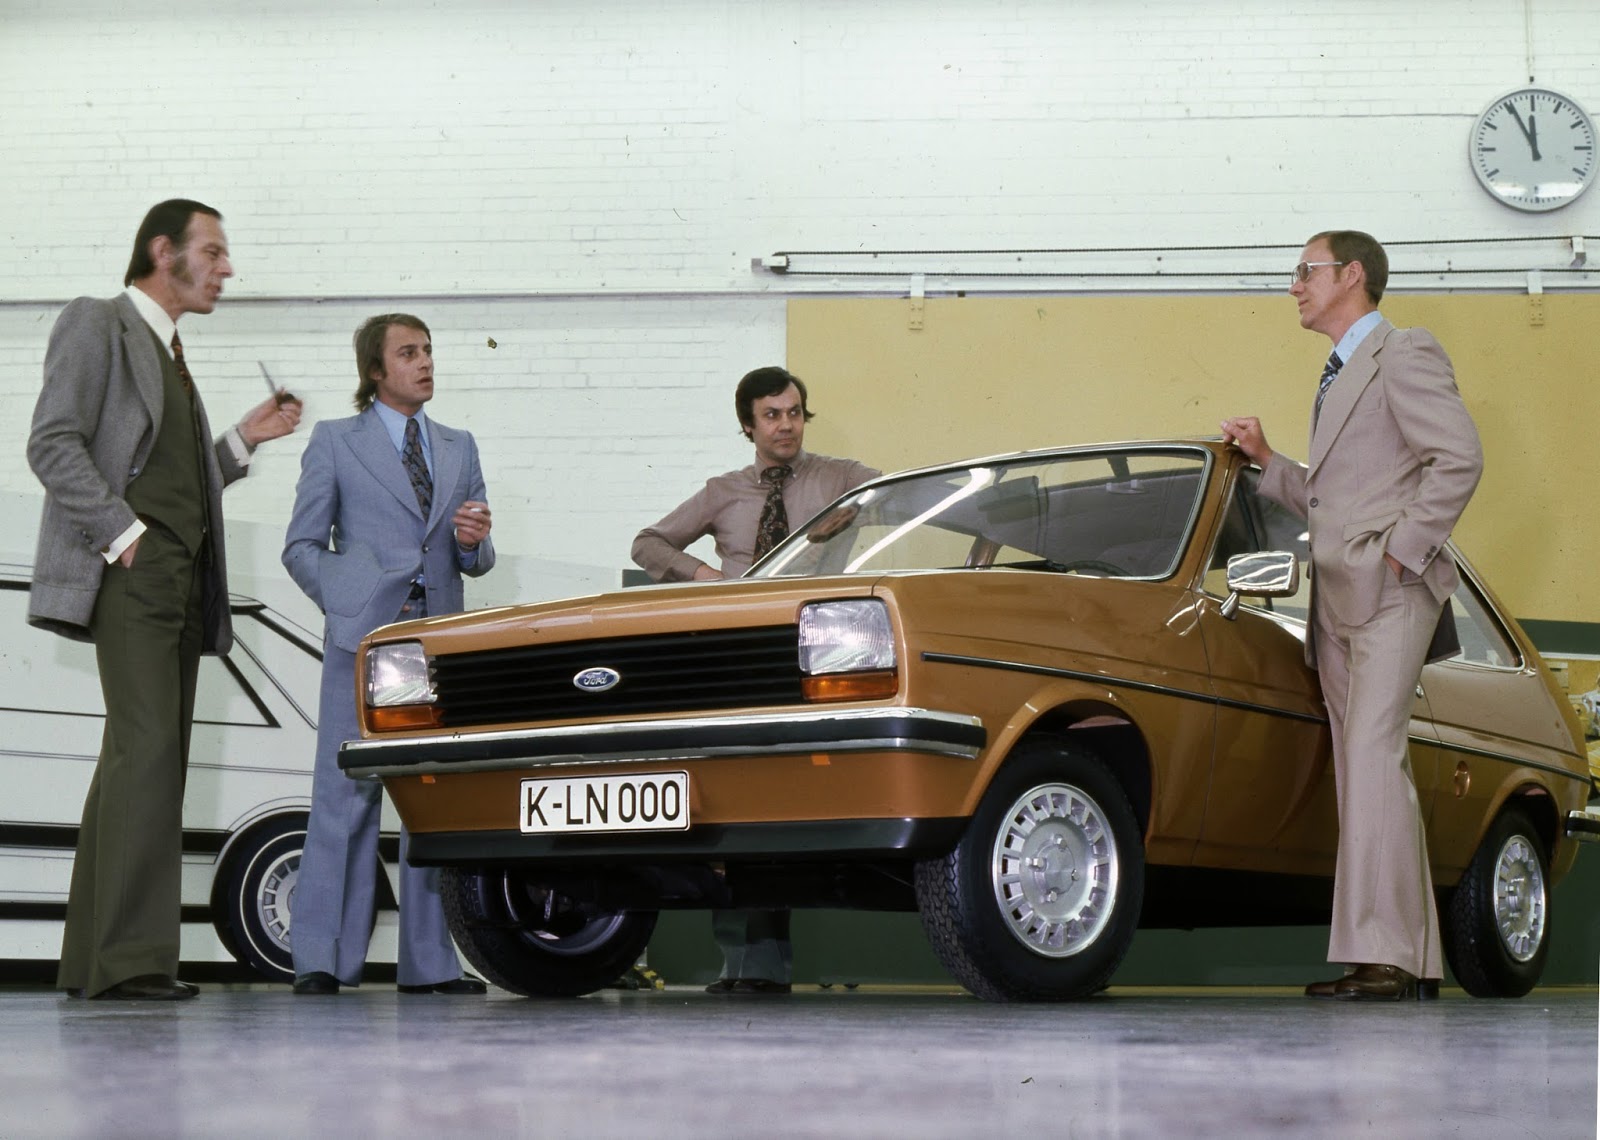 FordFiesta 1976 1983 DesignStudio UweBahnsen ClaudeLobo Merkenich 1976 01 2 Έκανες Πολύ Δρόμο Μωρό μου! - Το Ford Fiesta Γίνεται 40 Ετών